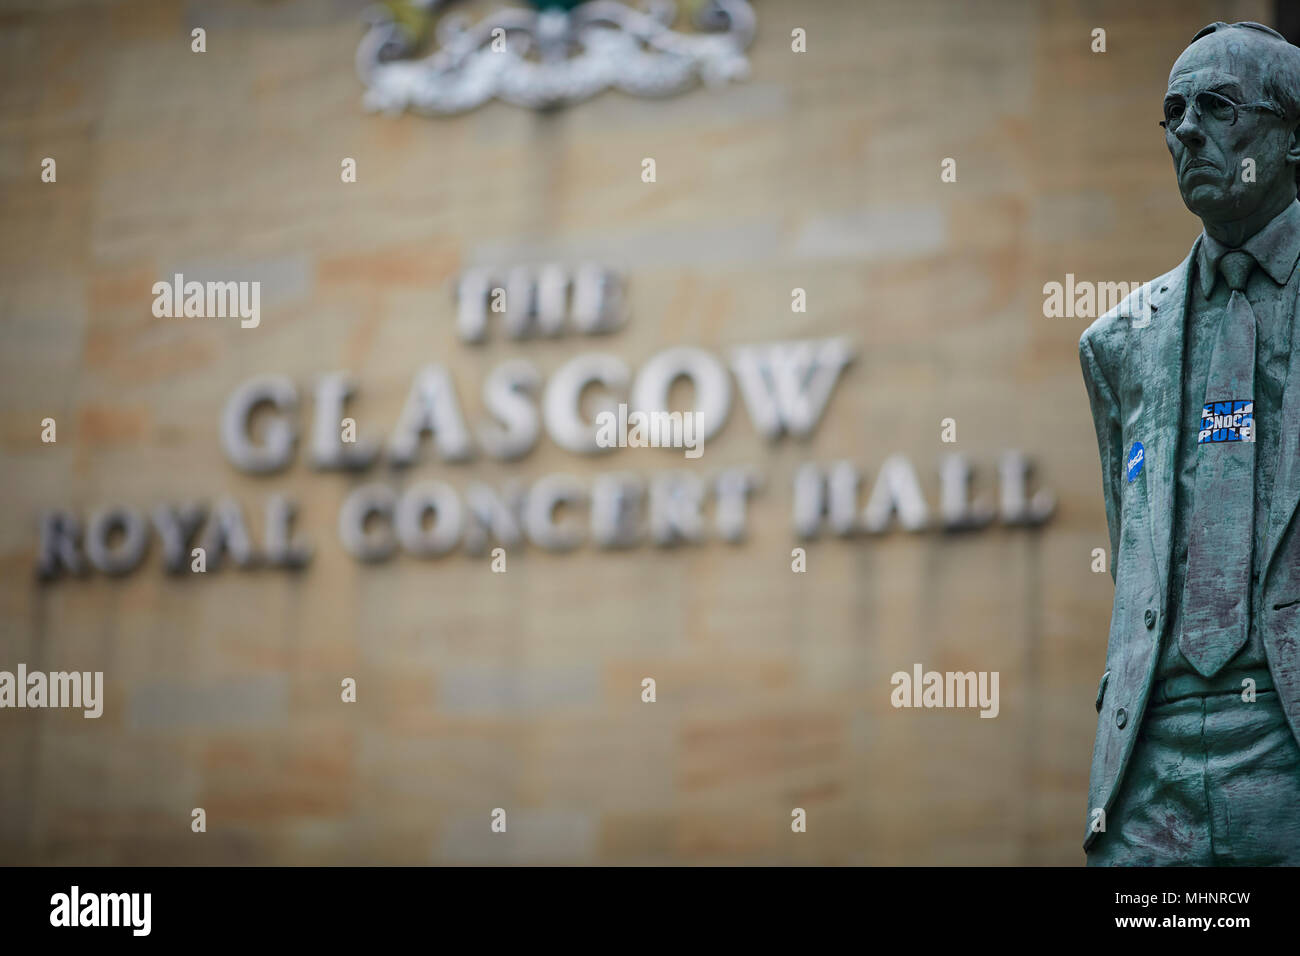 Glasgow in Scotland,  Royal Concert Hall Stock Photo